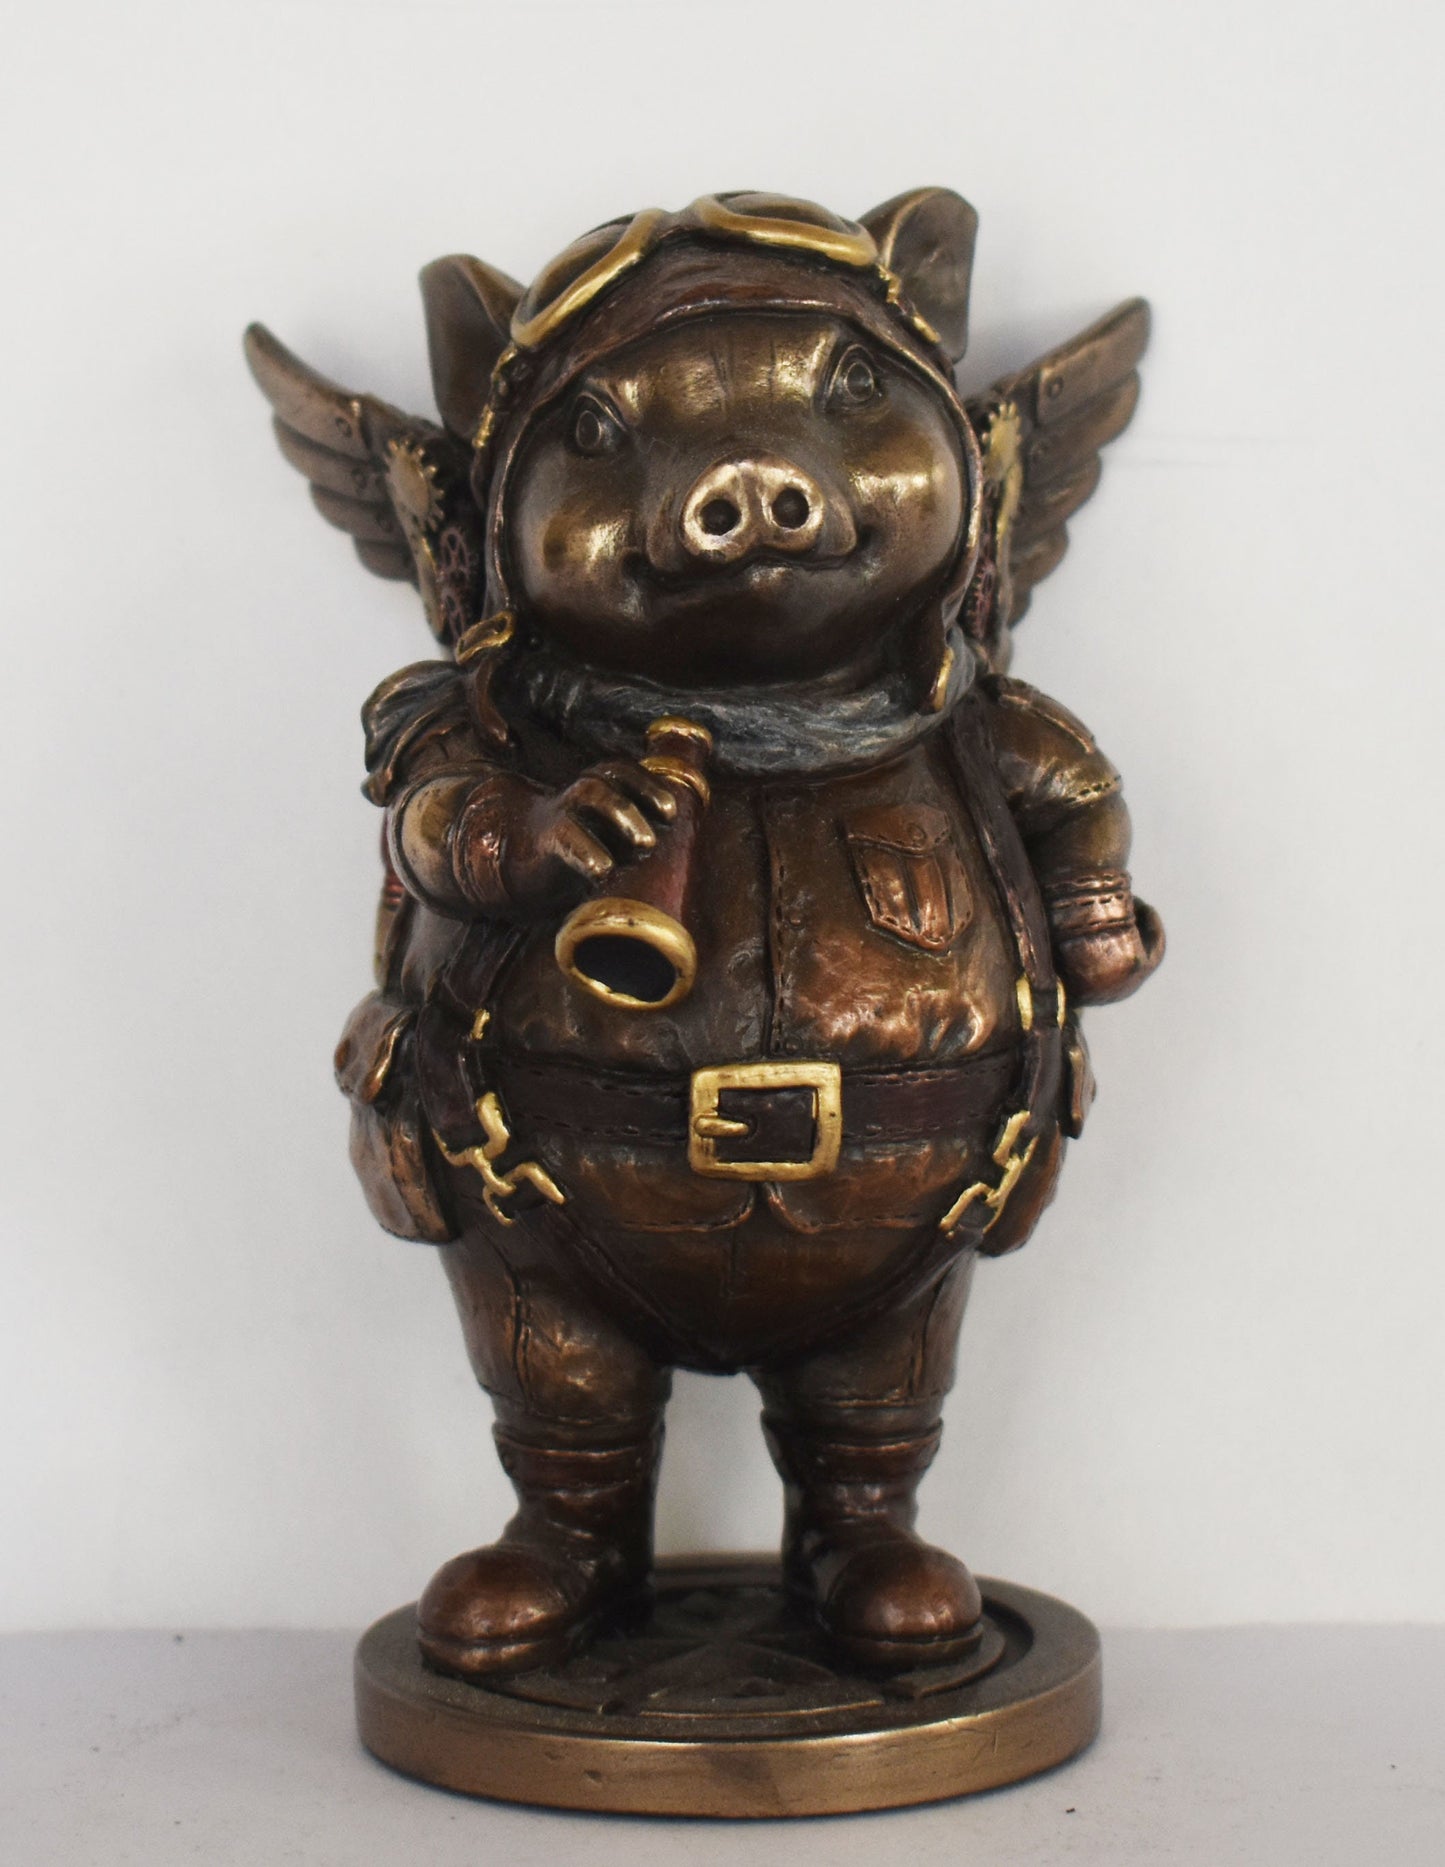 Pig Statue  - Explorer - Steampunk - Modern Art - Decoration - Cold Cast Bronze Resin